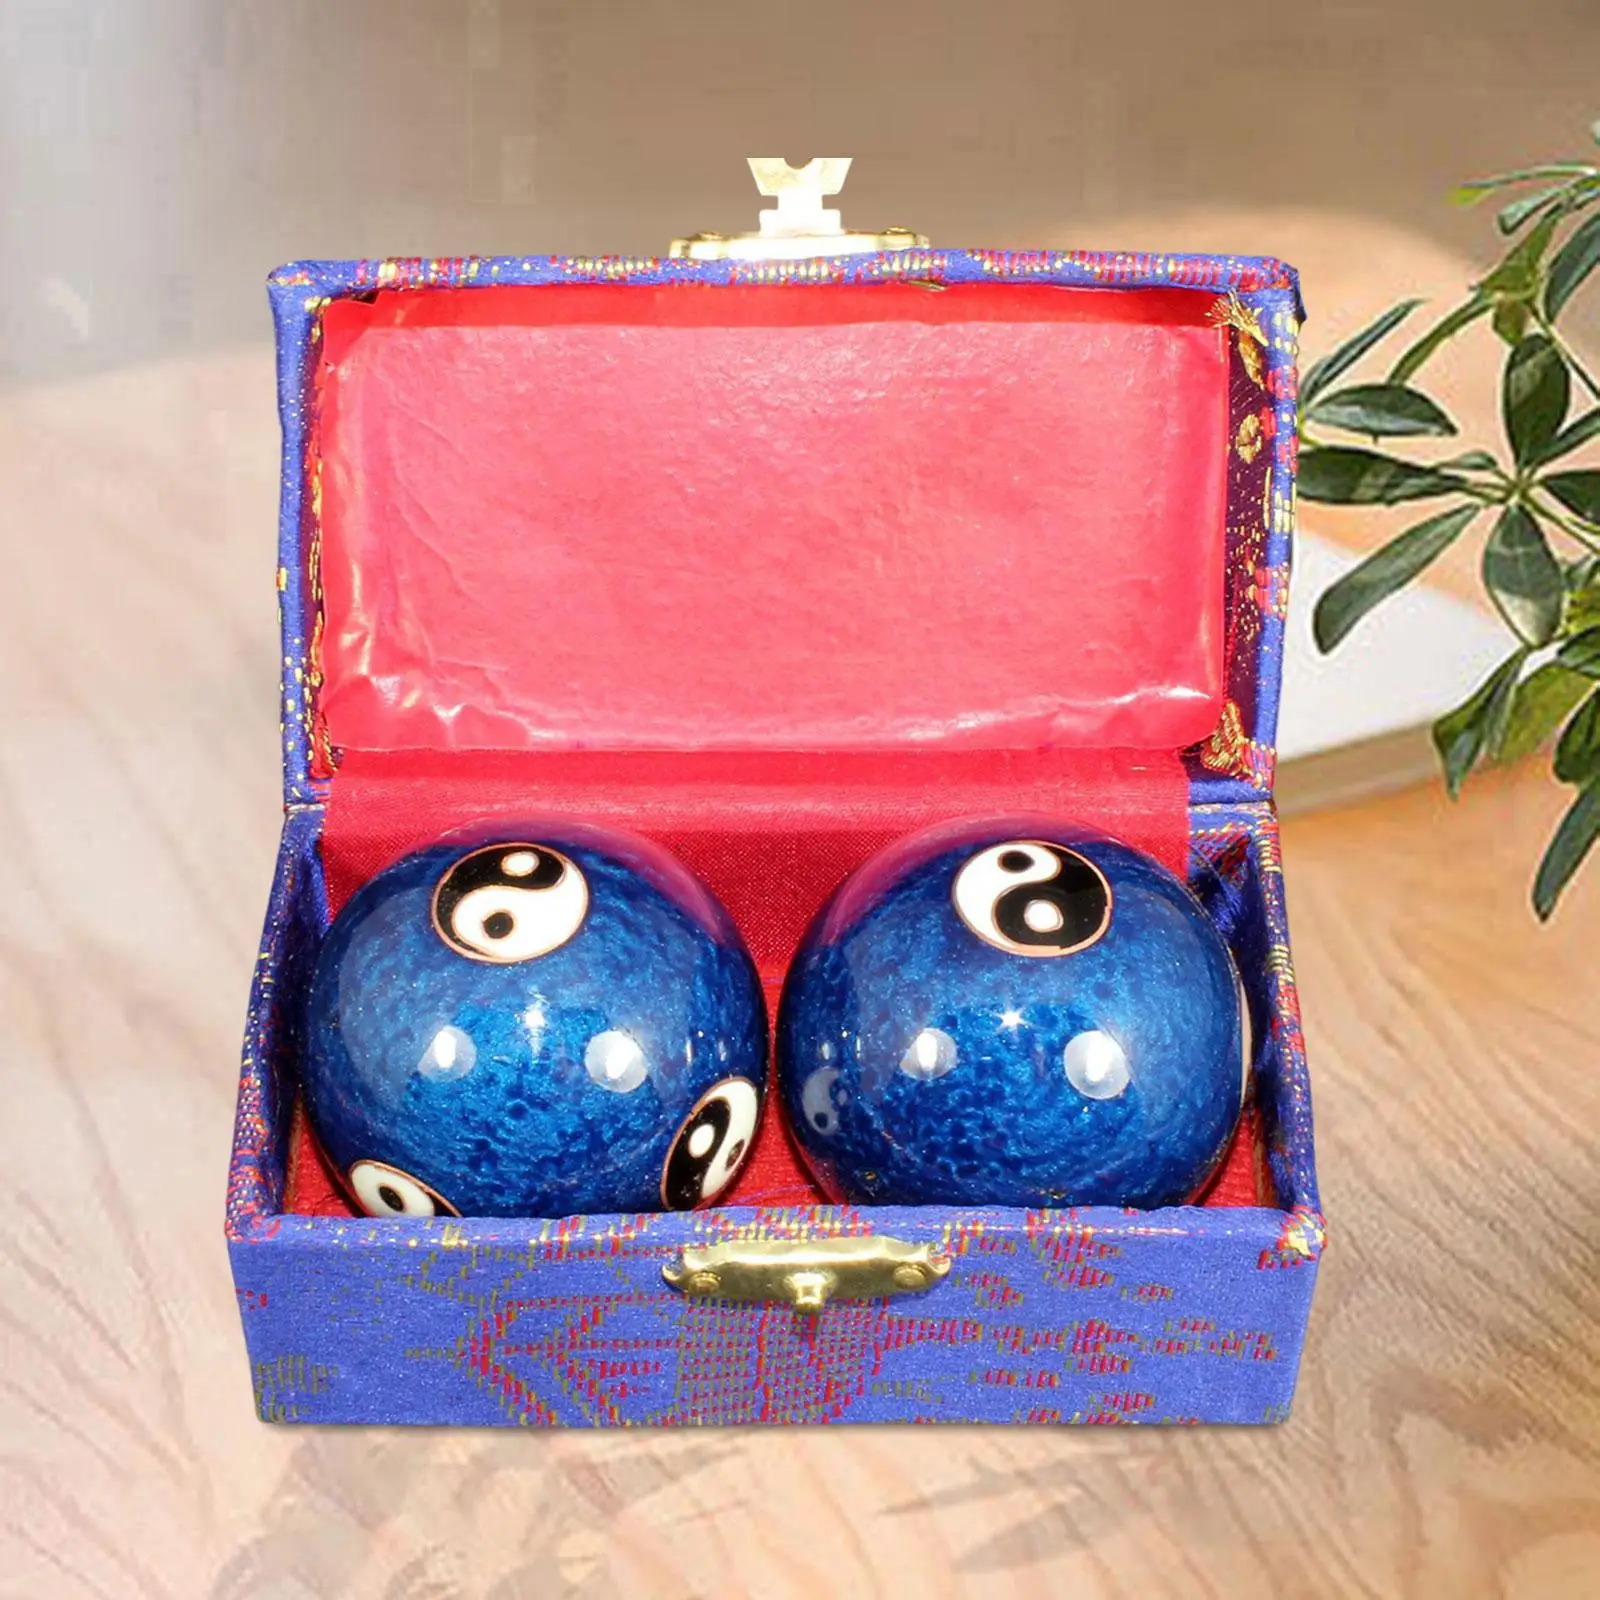 2 Pieces Massage Balls with Storage Box Exerciser Durable Baoding Balls Chinese Exercise Handballs for Parents Elderly Children